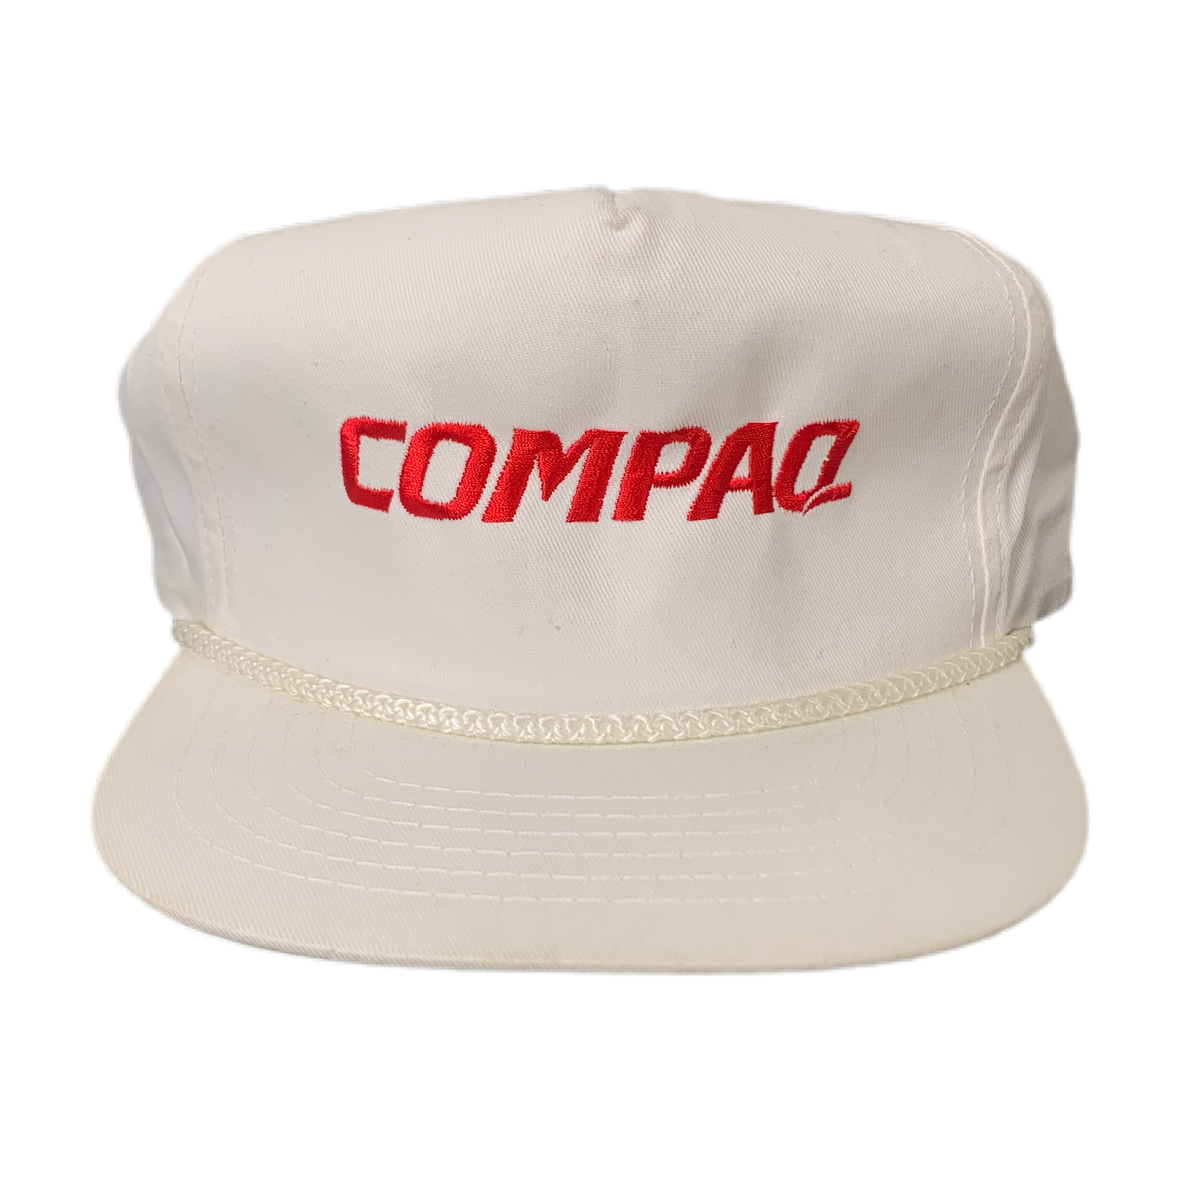 Vintage Compaq “Computers” Leather Strap Hat